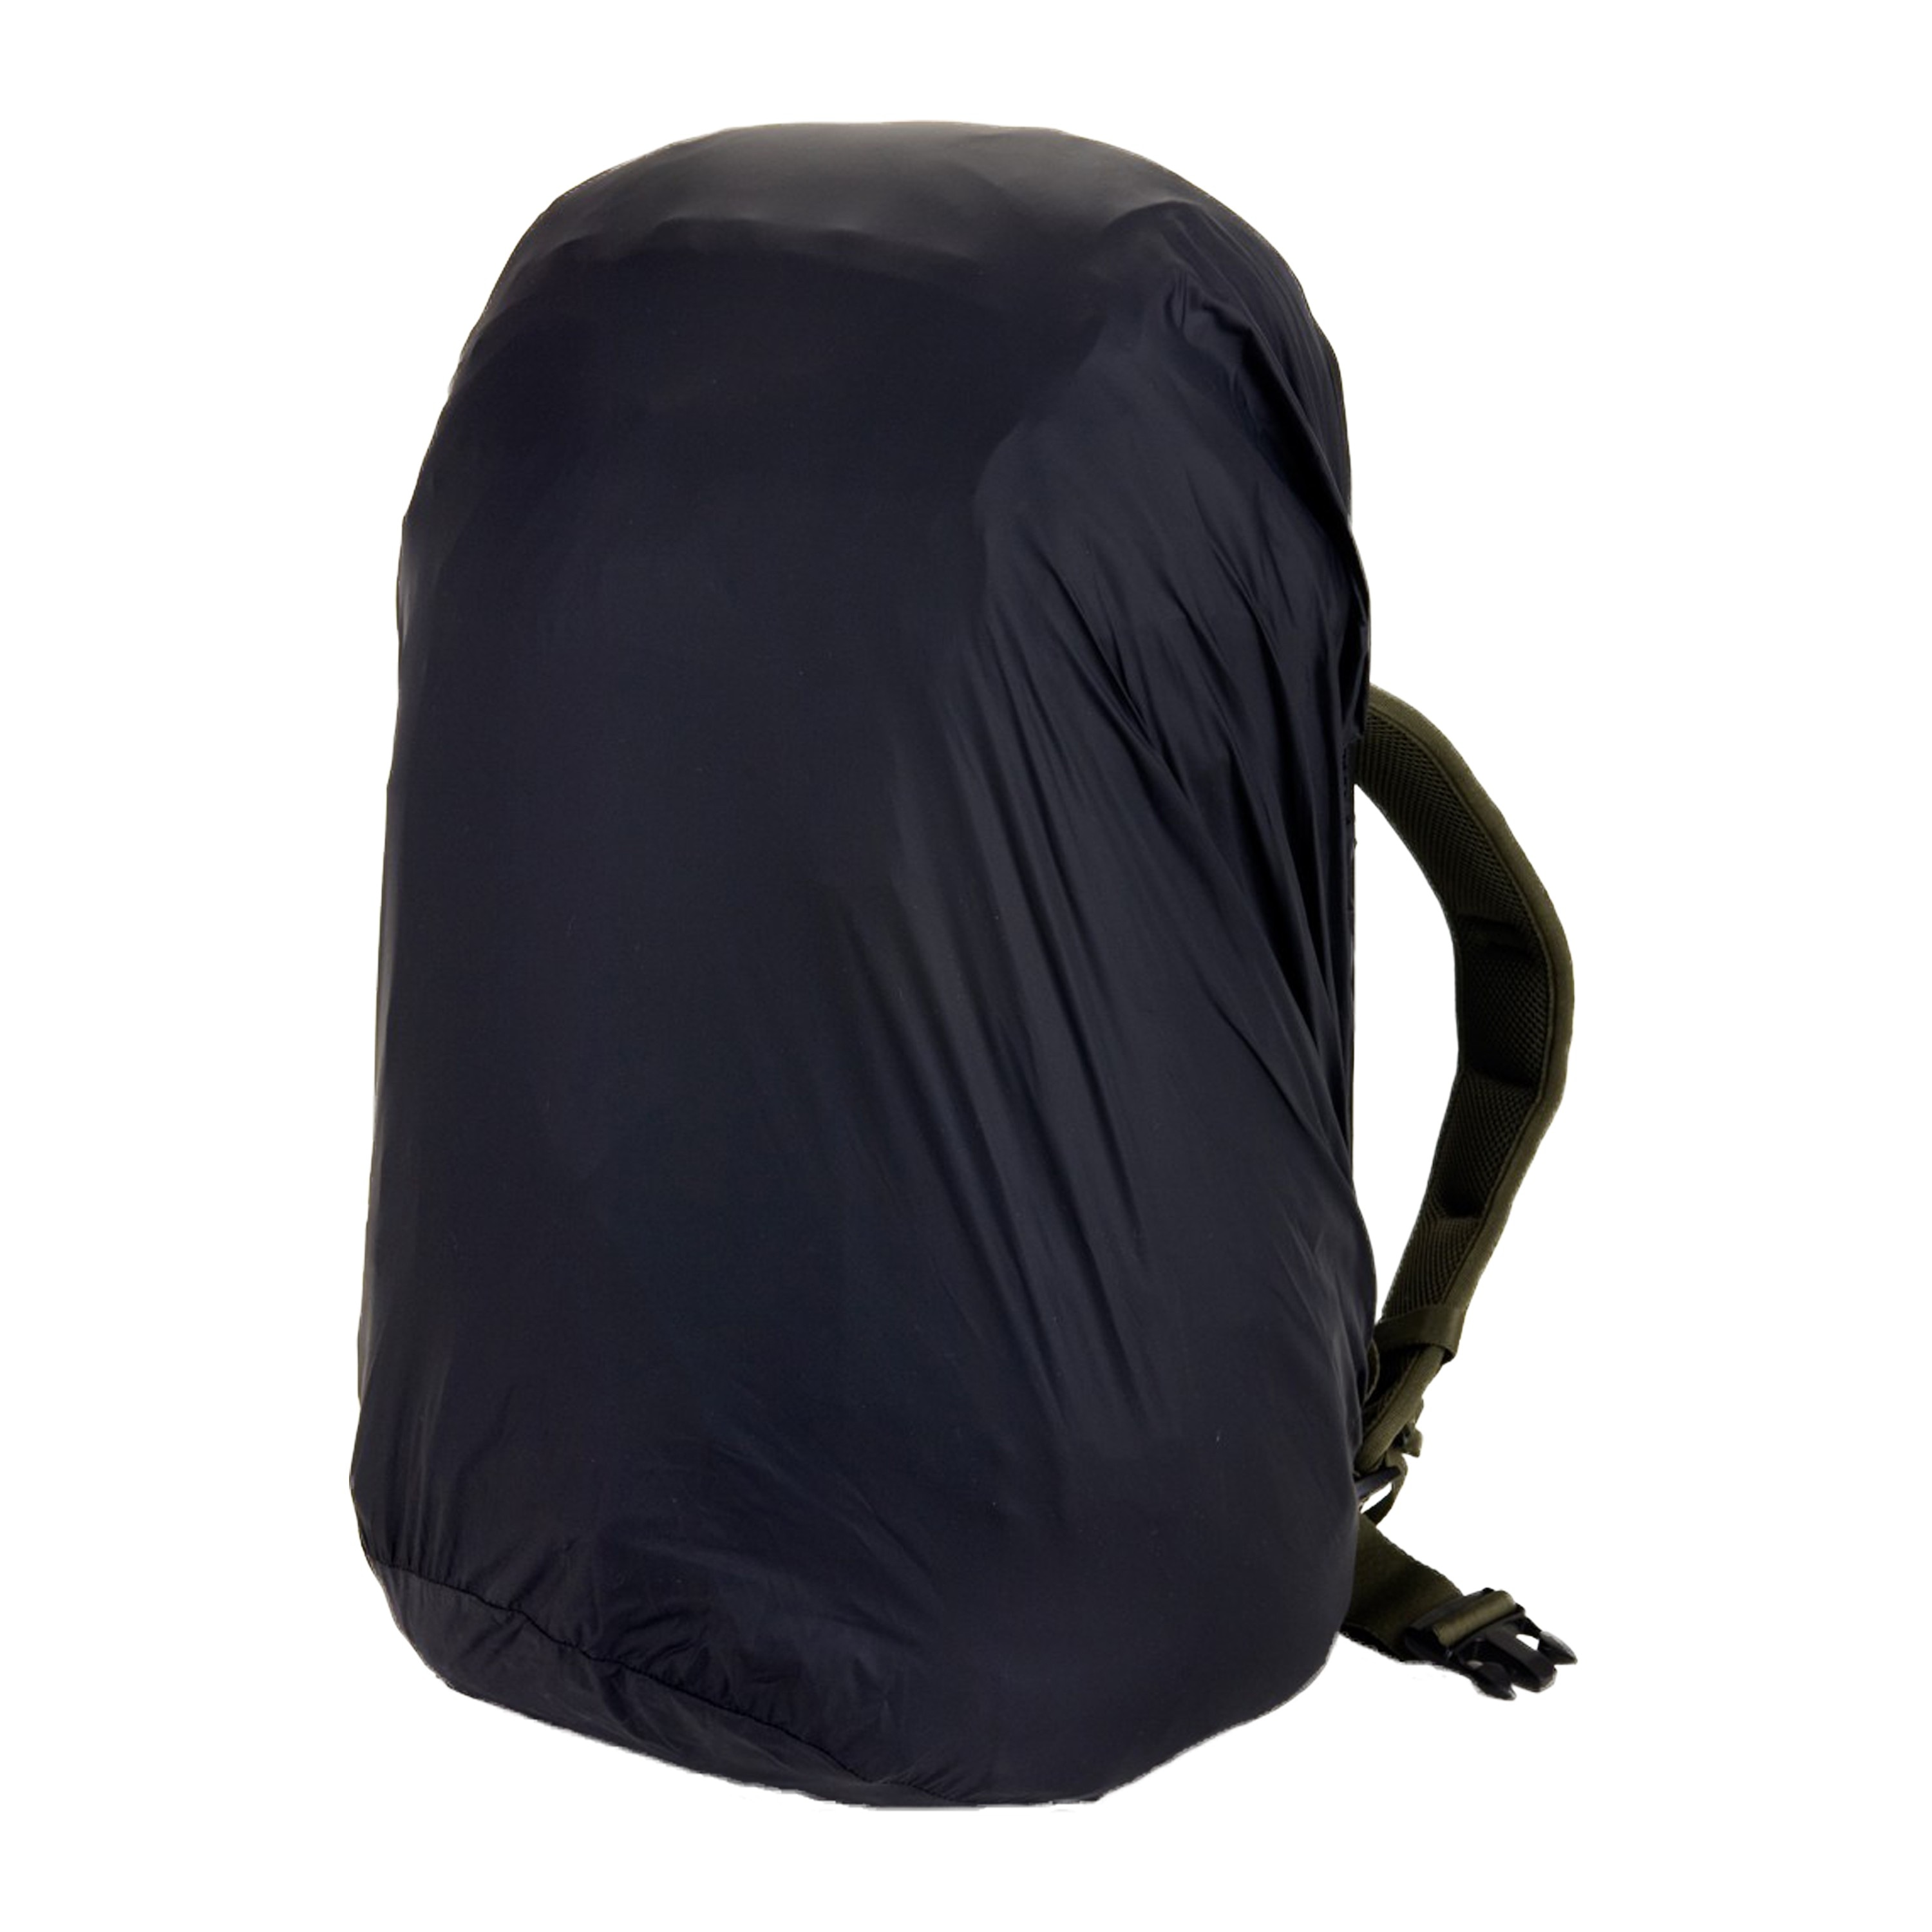 Snugpak Backpack Aquacover 25 L black | Snugpak Backpack Aquacover 25 L ...